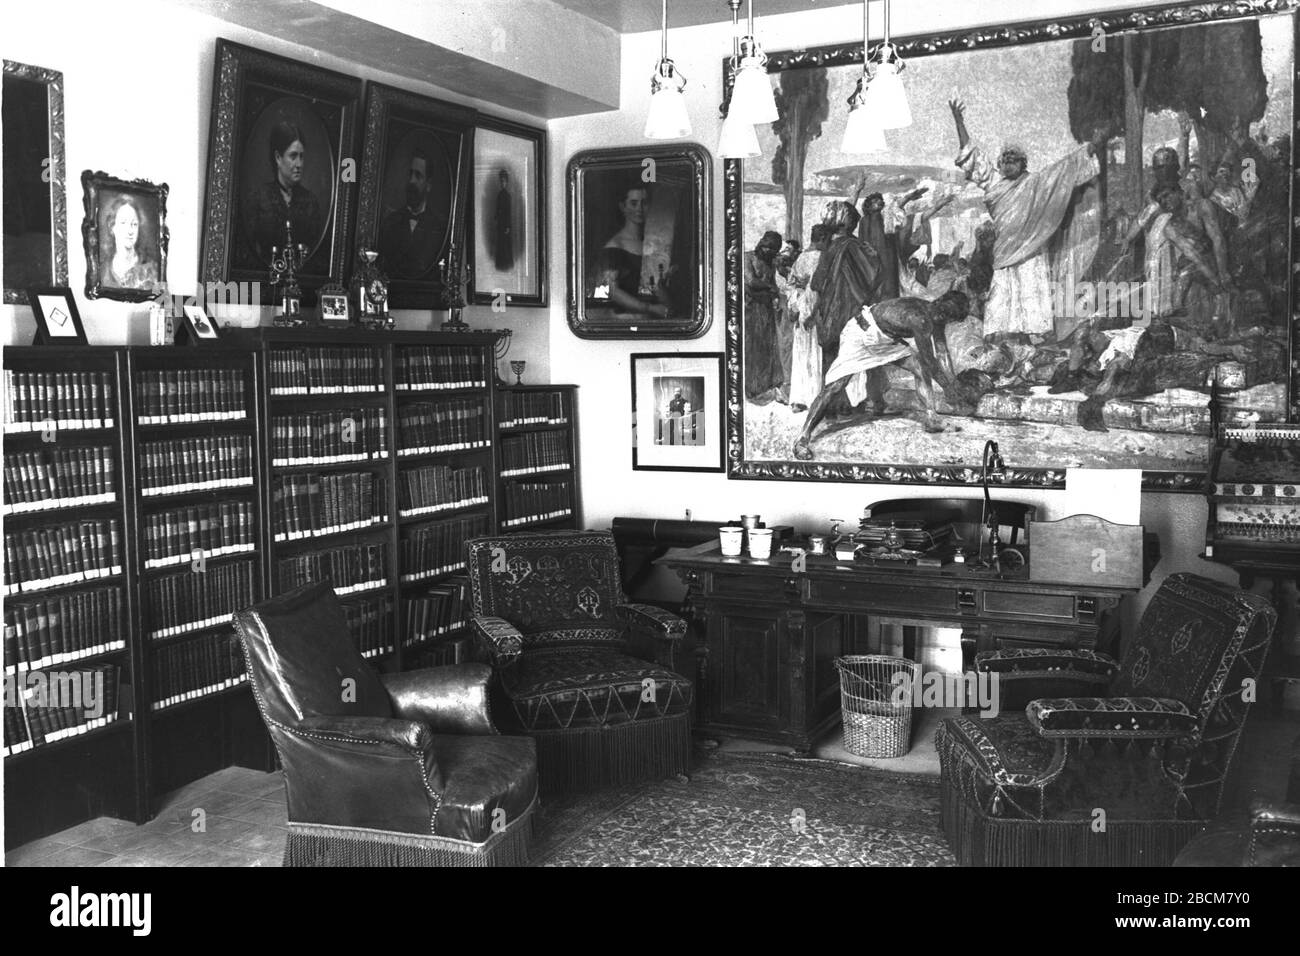 English The Study Of Theodor Herzl With Its Original Furniture Transferred To The Keren Hakayemet Headquarters In Jerusalem I O I I O I U Ss I O E U C O I C U E O U O U N E E I U E C I I